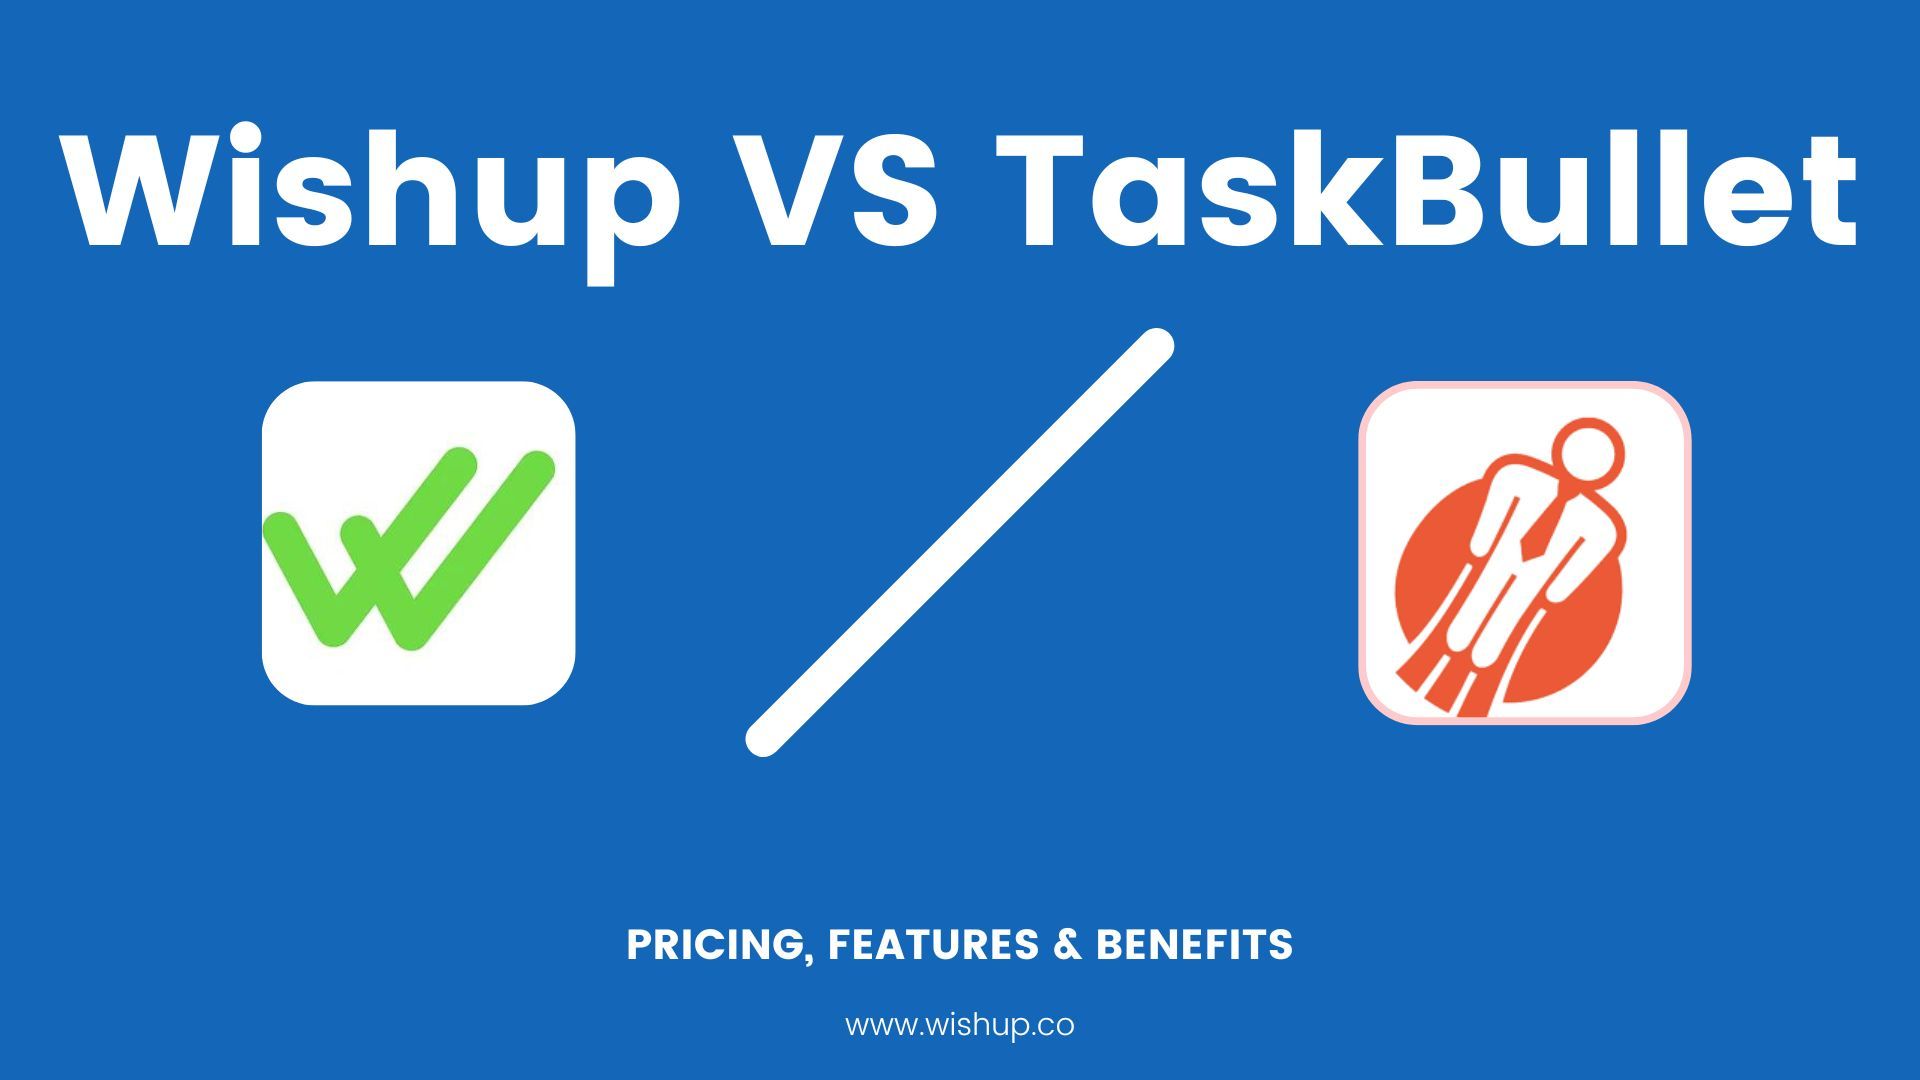 Wishup Virtual Assistants are better than TaskBullet